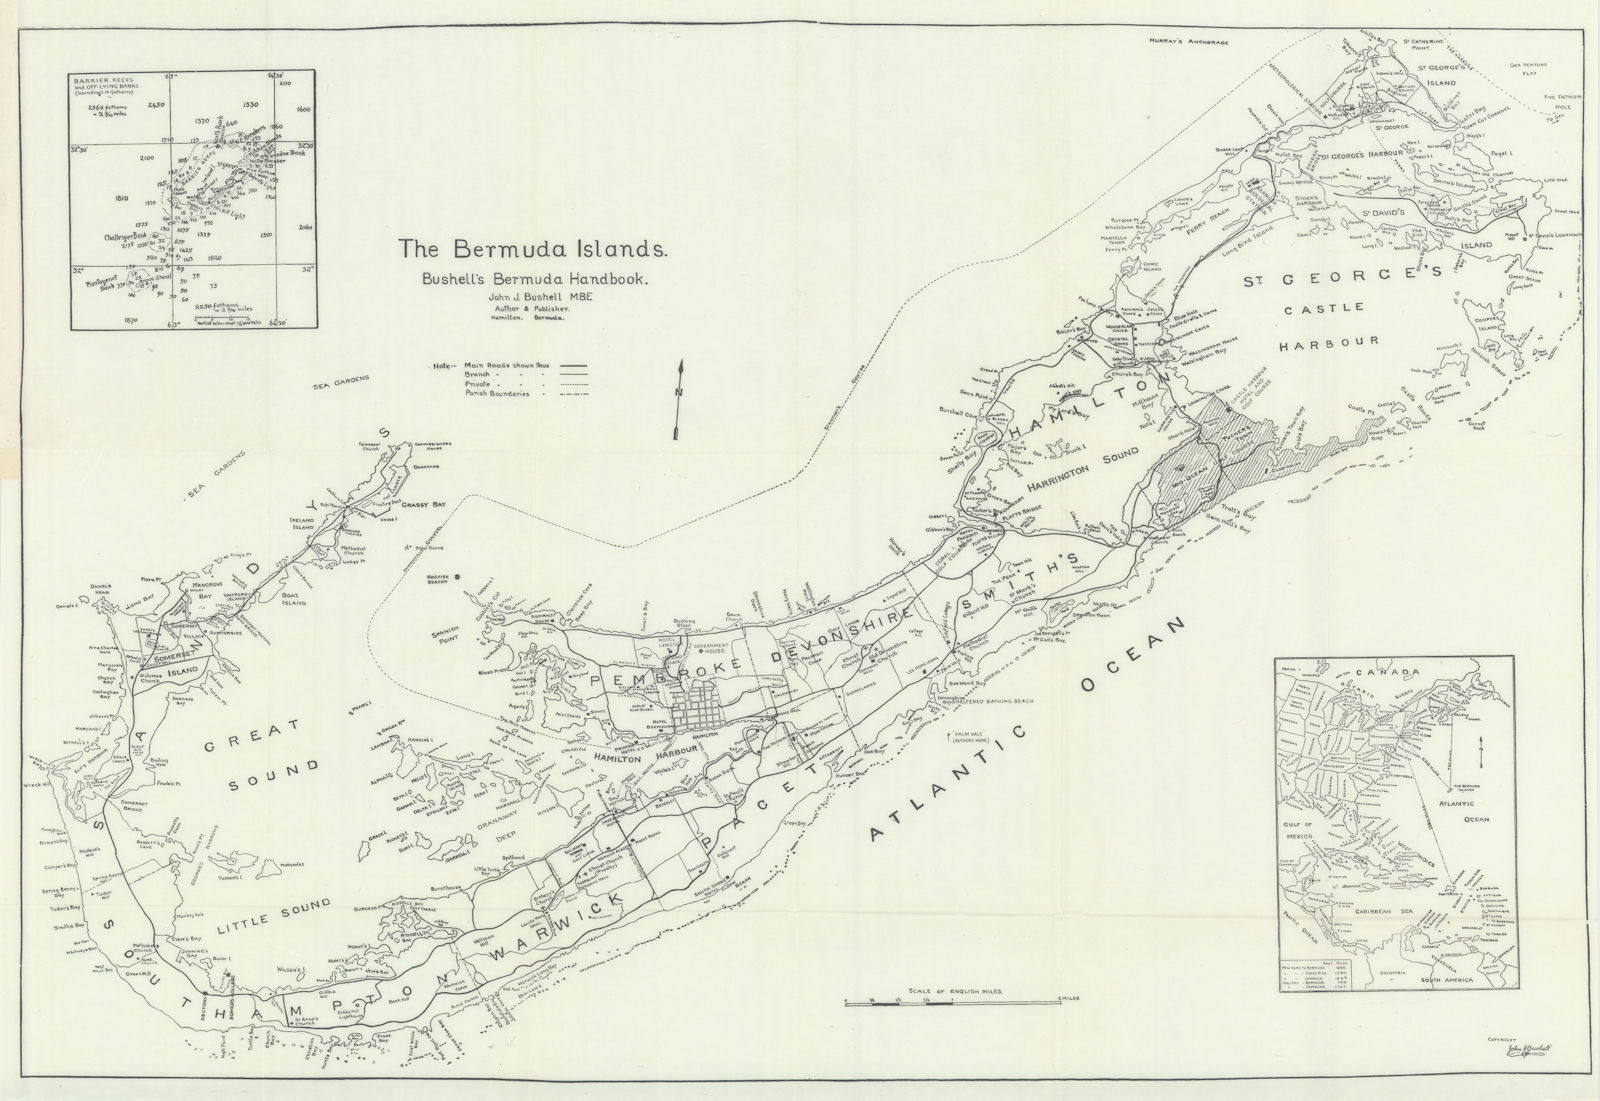 The Bermuda Islands - Bushell's Bermuda handbook - by John Bushell 1938 map